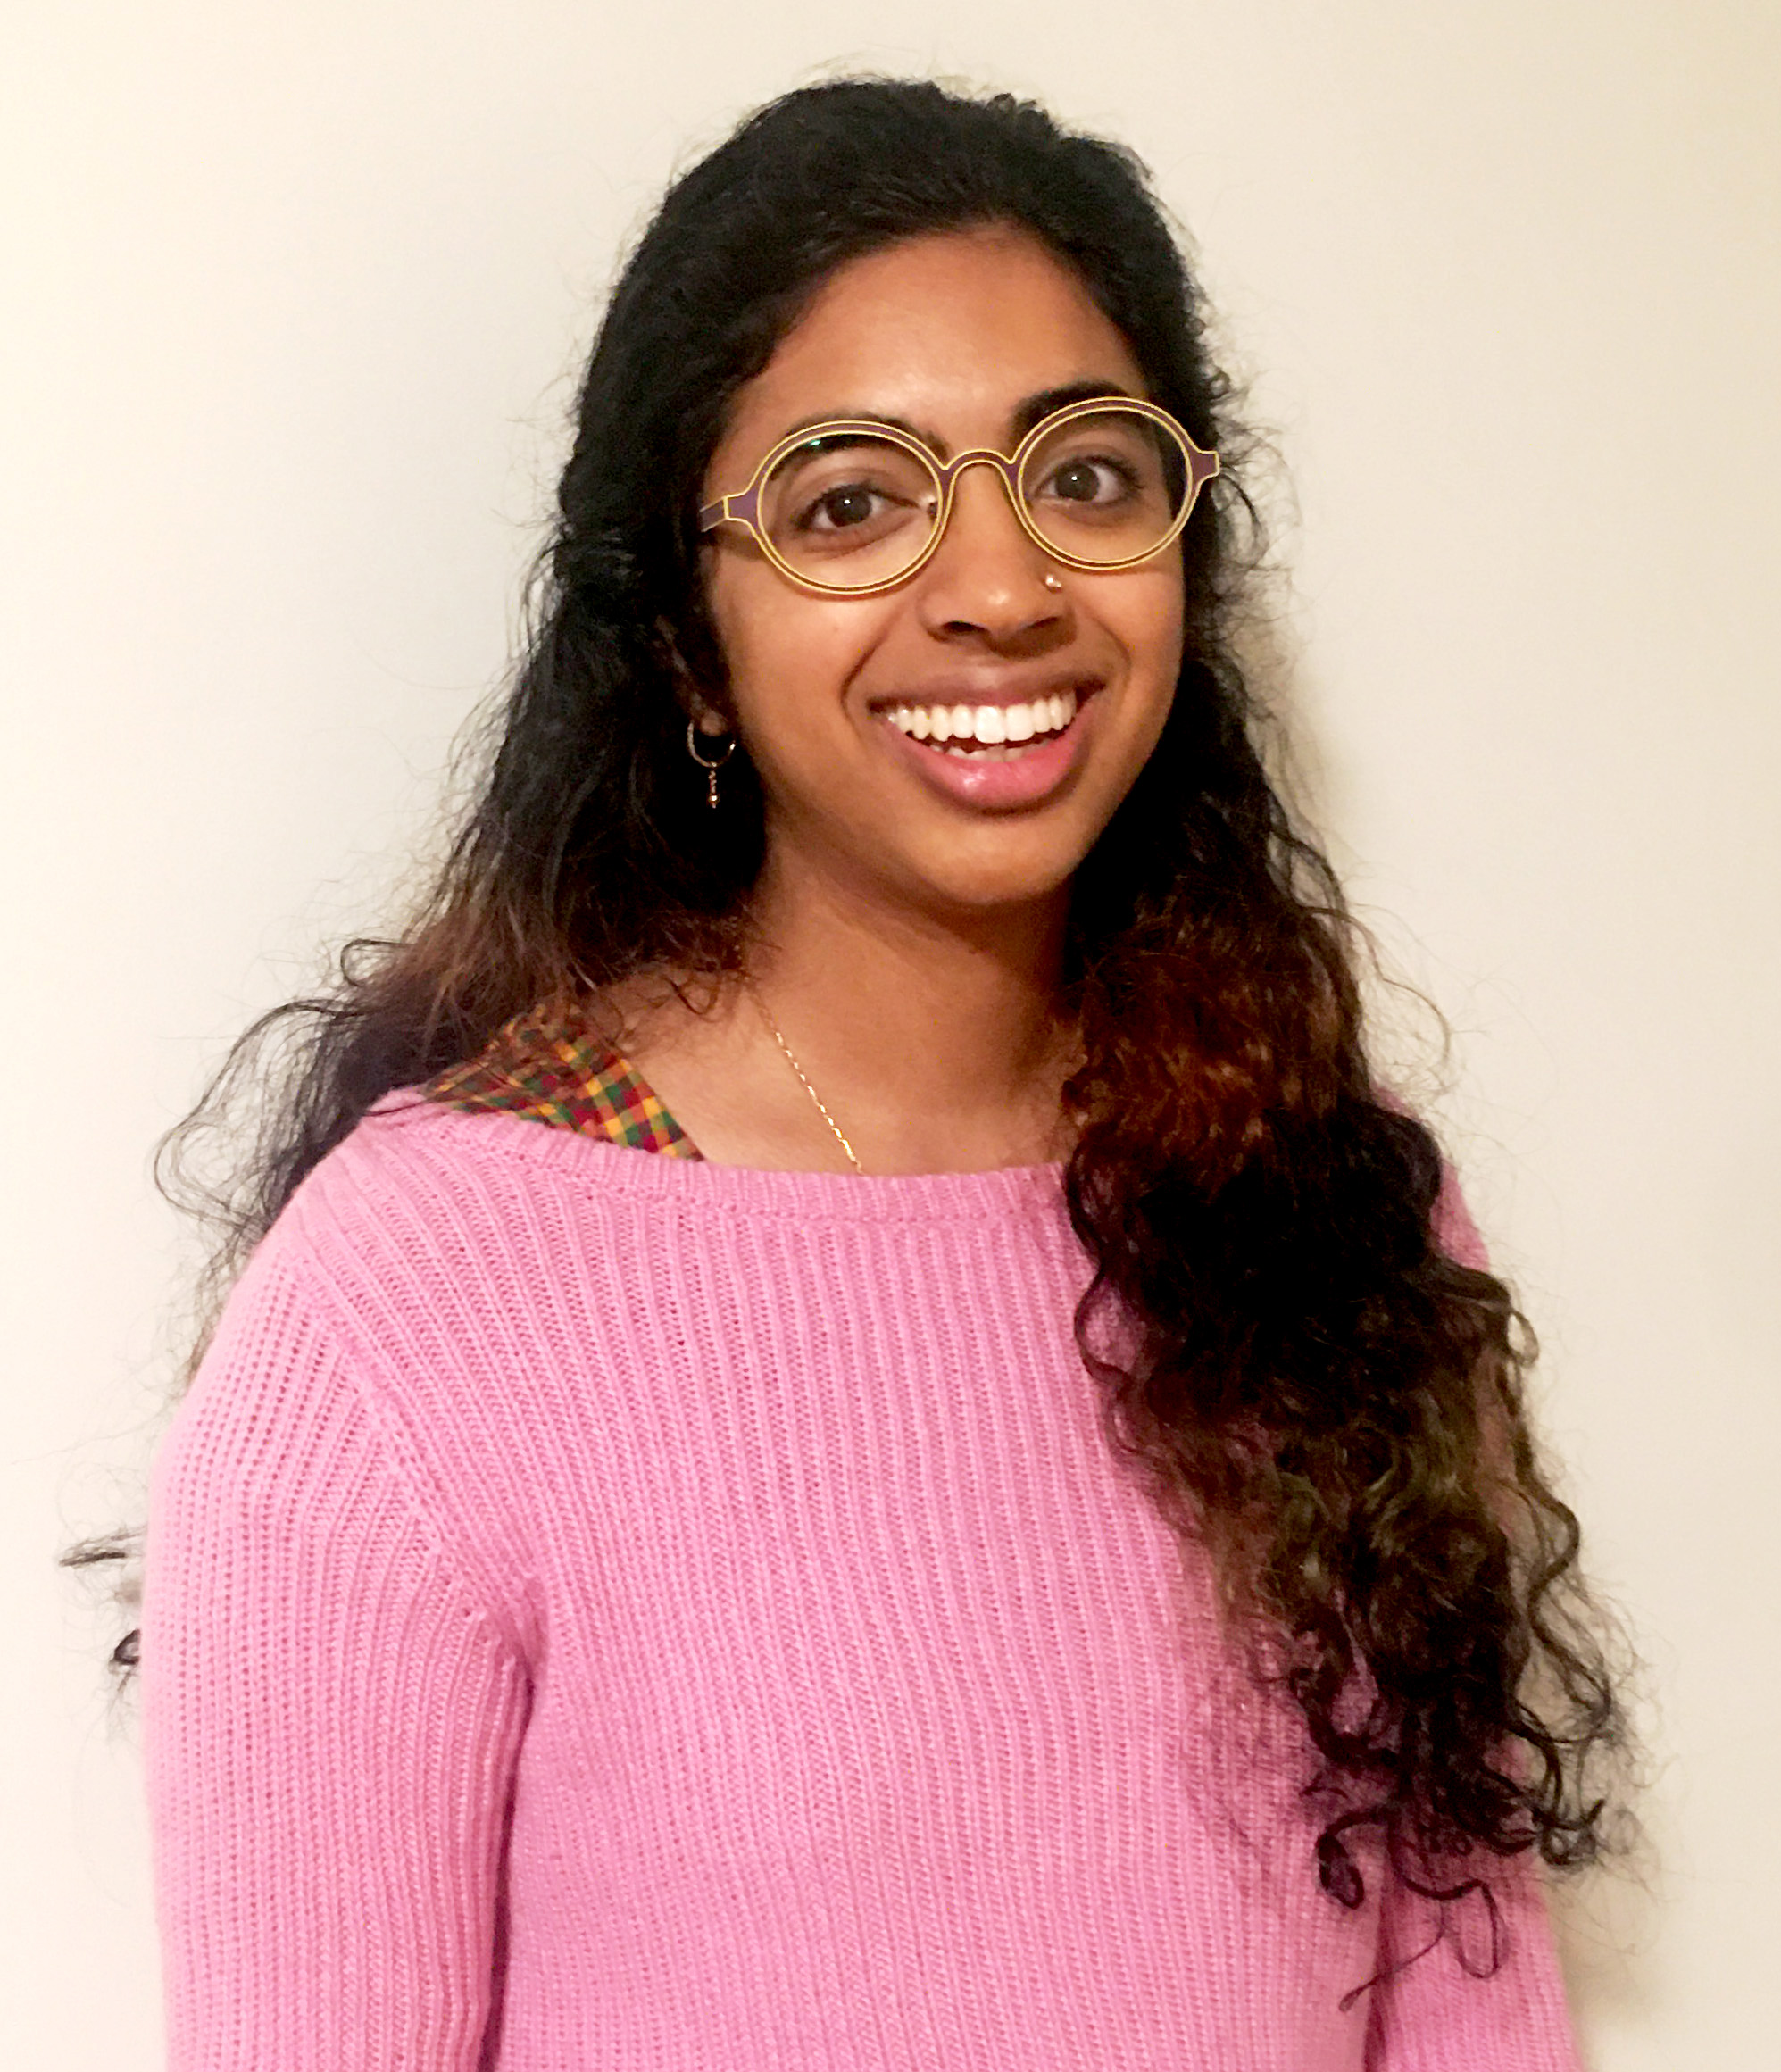 A photograph of Bhavani Srinivas, an Indian-American woman with curly hair.